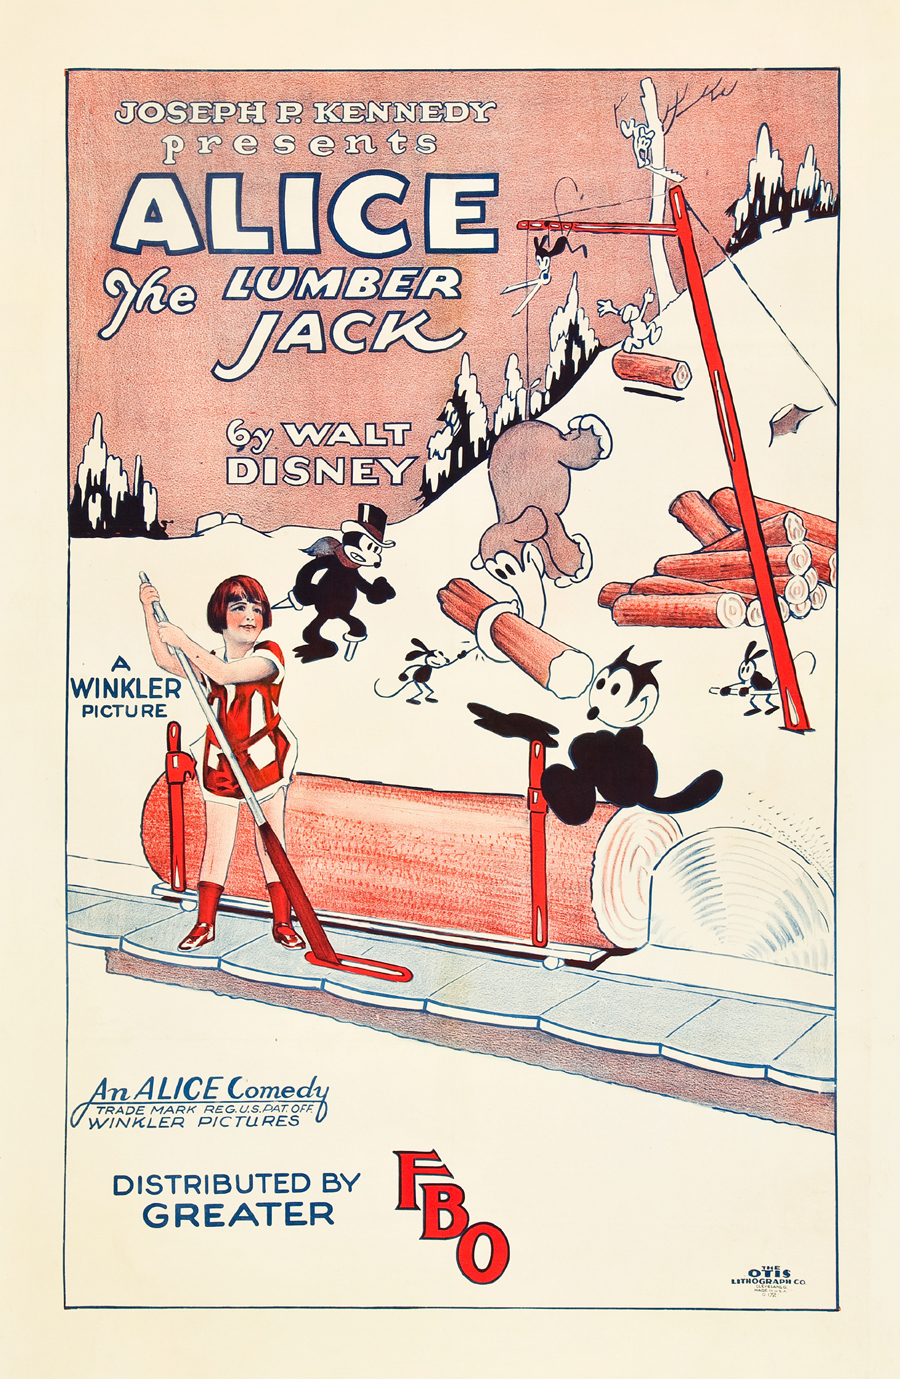 “Alice the Lumberjack” film poster